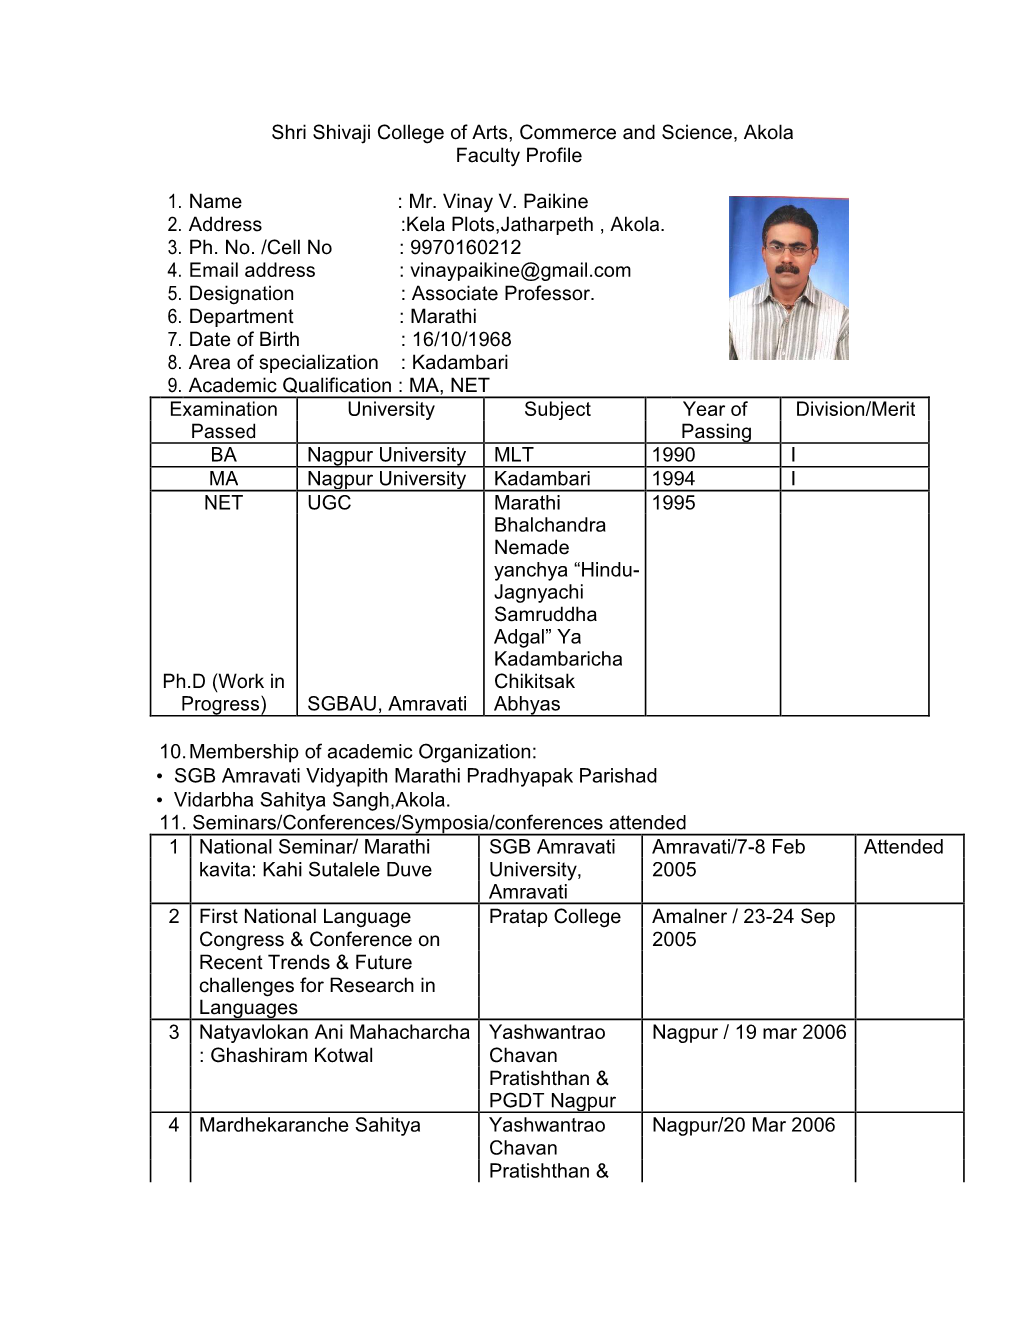 Shri Shivaji College of Arts, Commerce and Science, Akola Faculty Profile 1. Name : Mr. Vinay V. Paikine 2. Address :Kela Plots